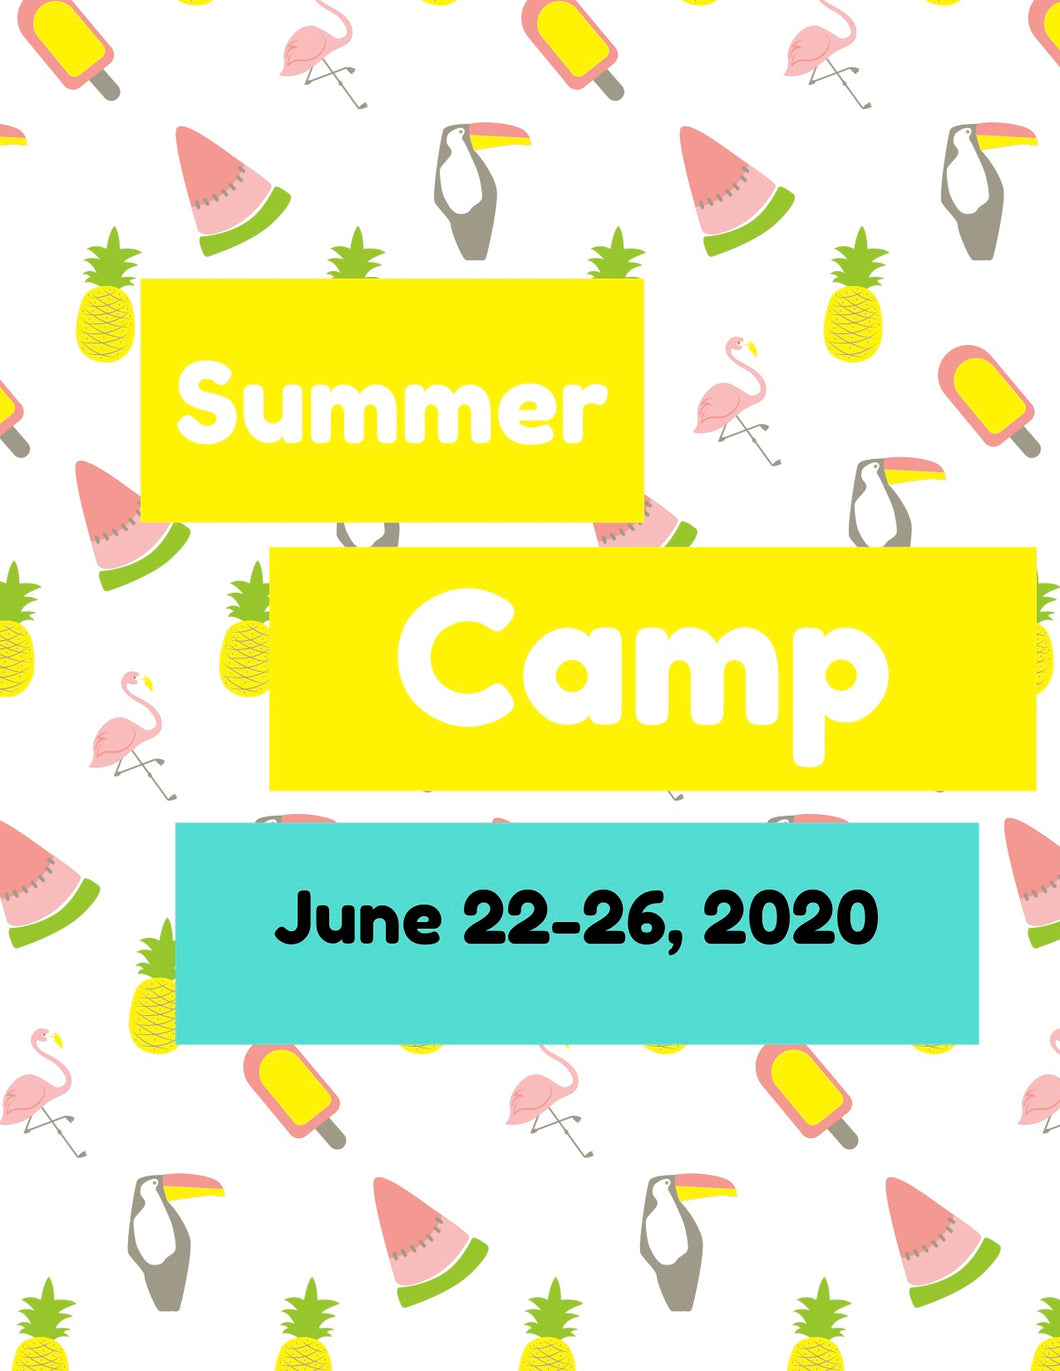 Summer Camp June 22-26, 2020